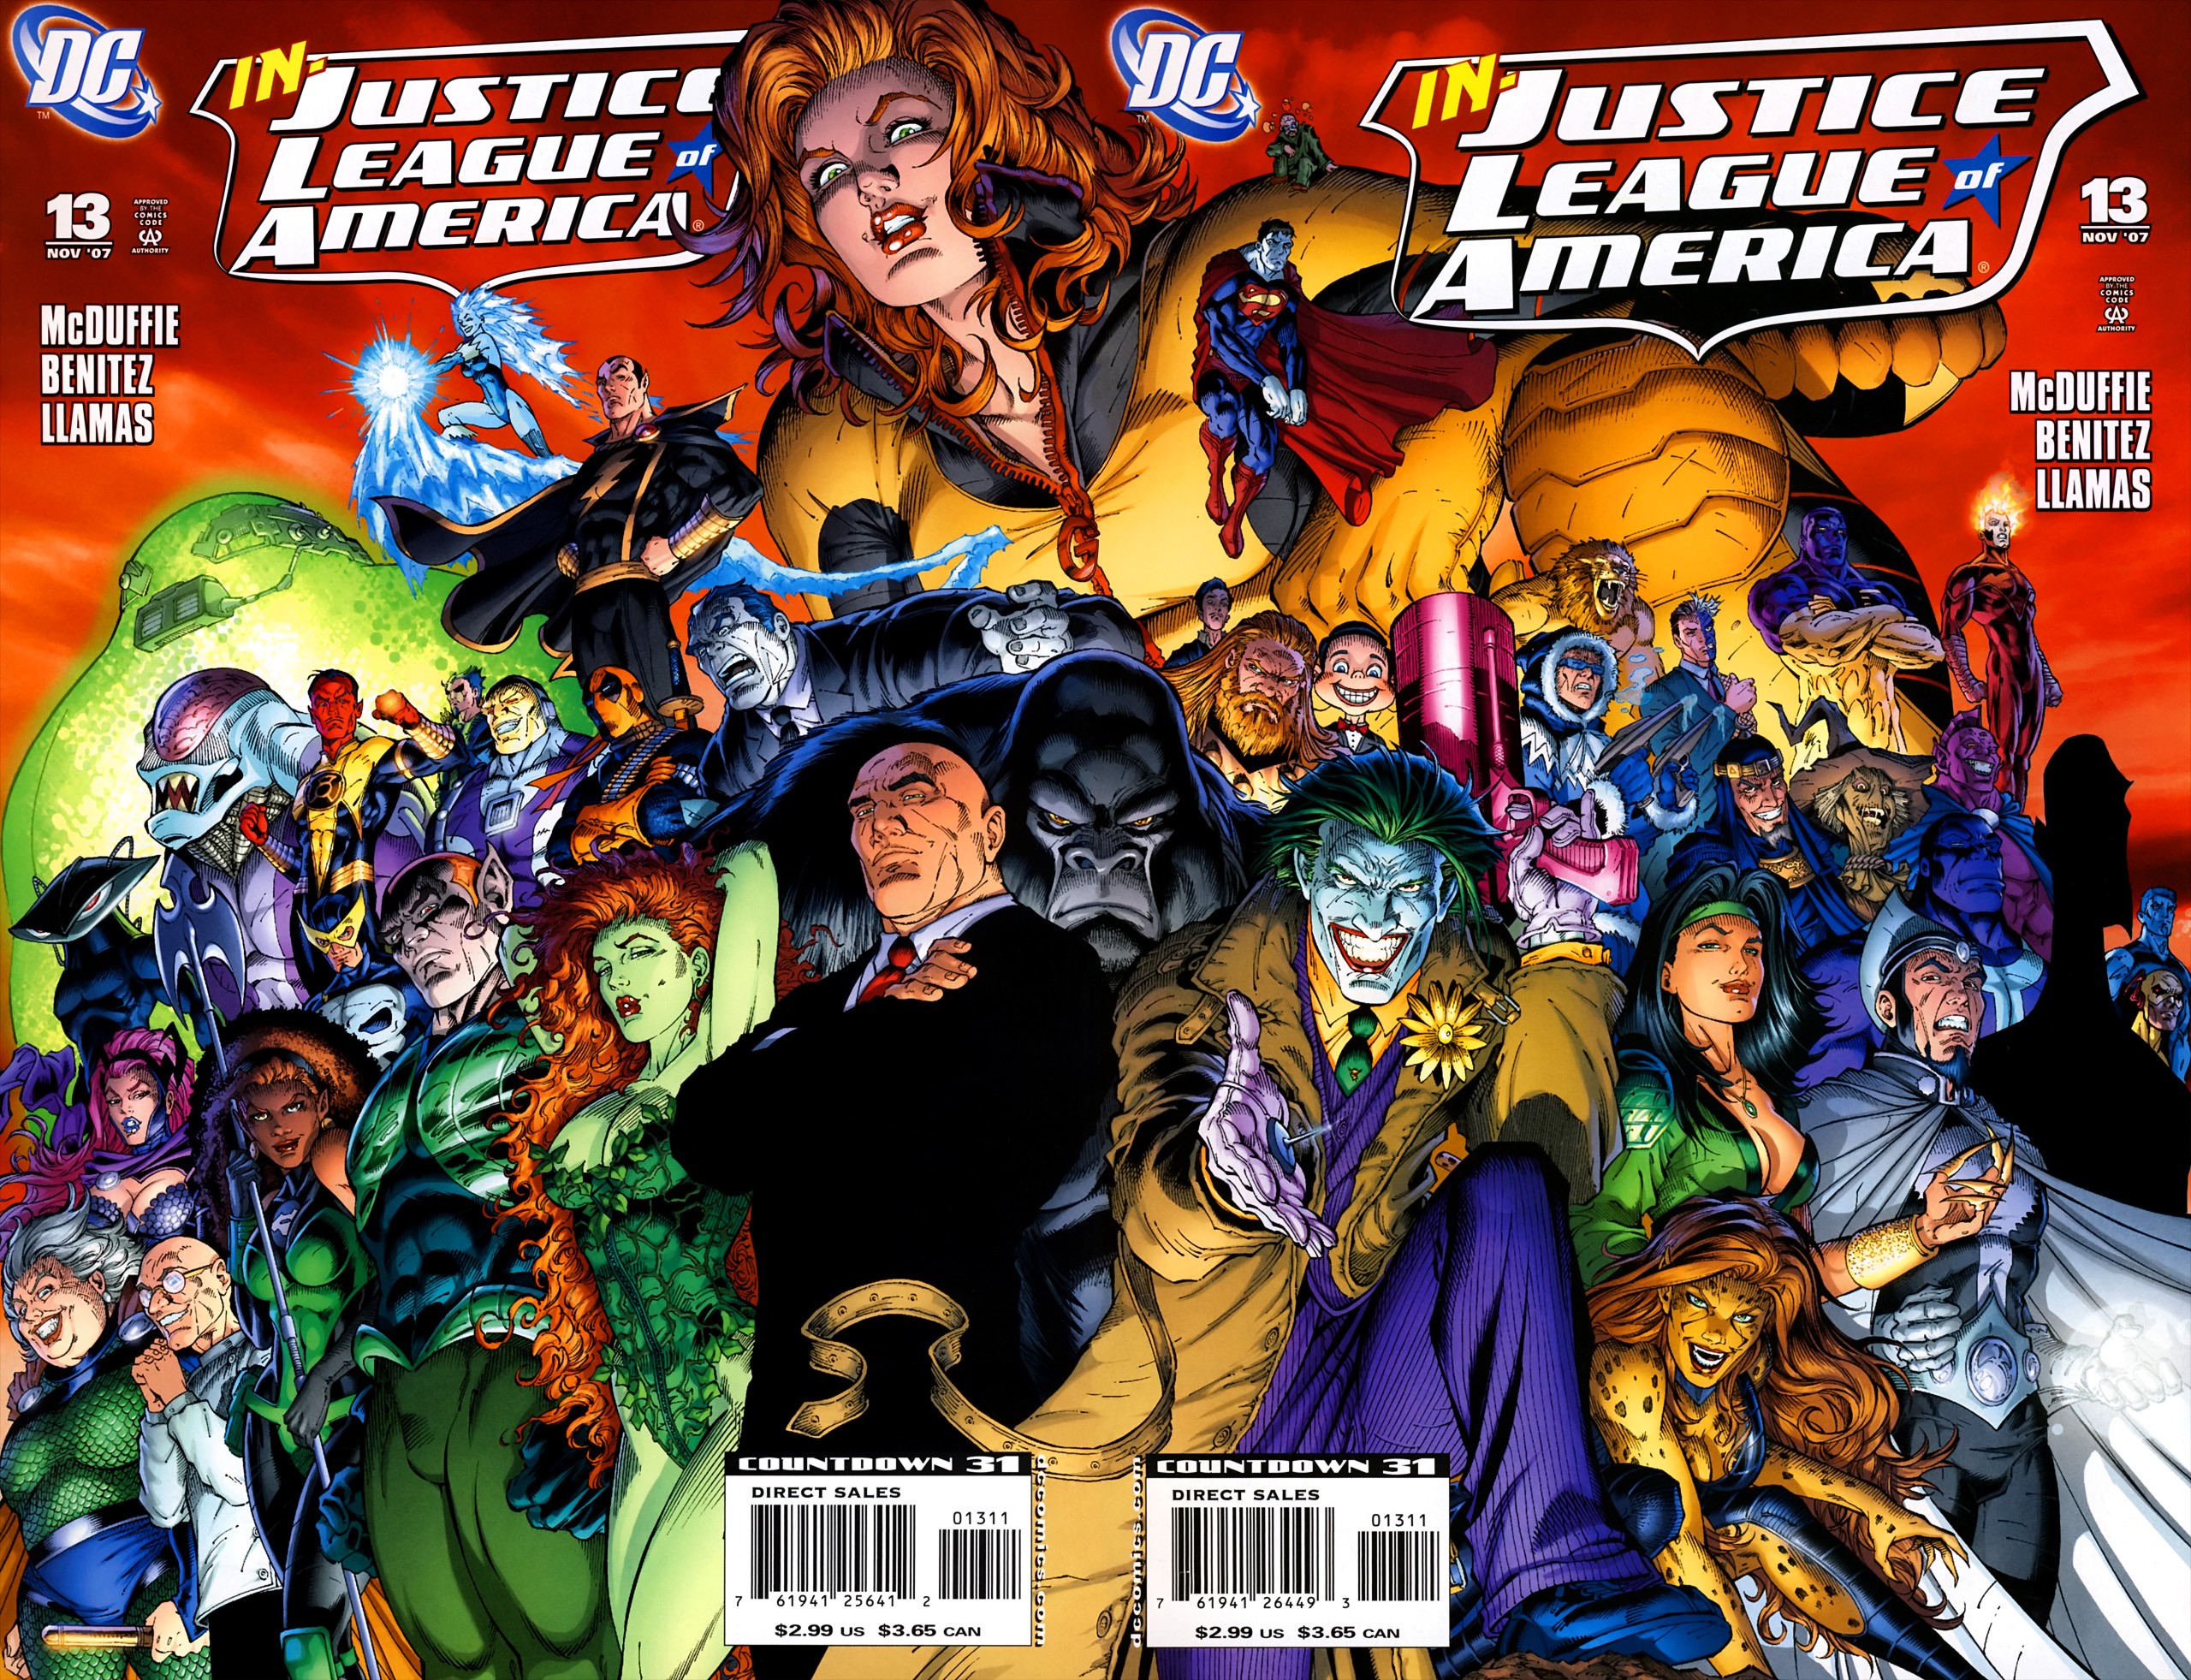 Justice League of America Vol. 2 #13